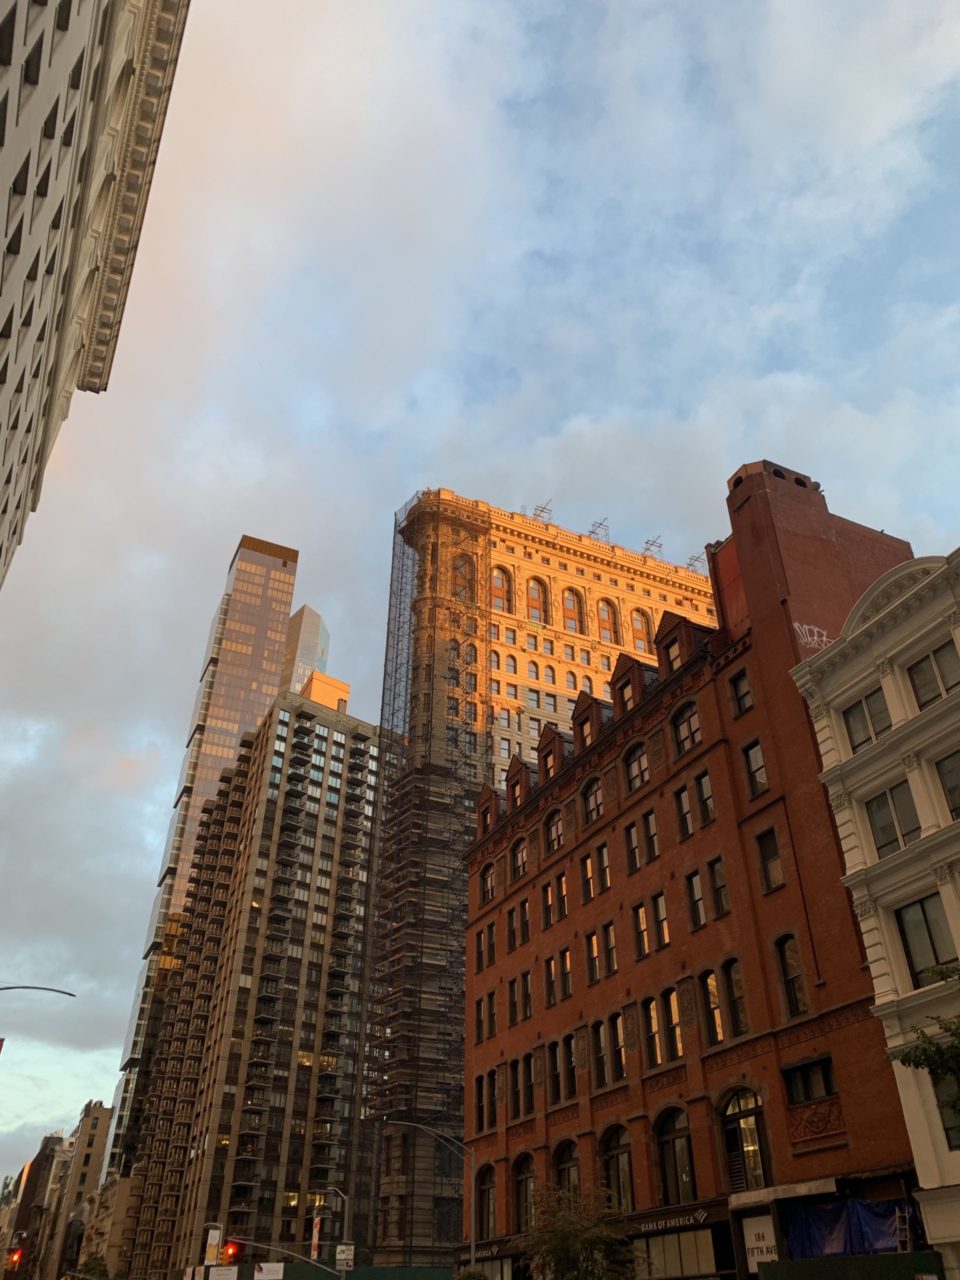 An NYU building at golden hour.